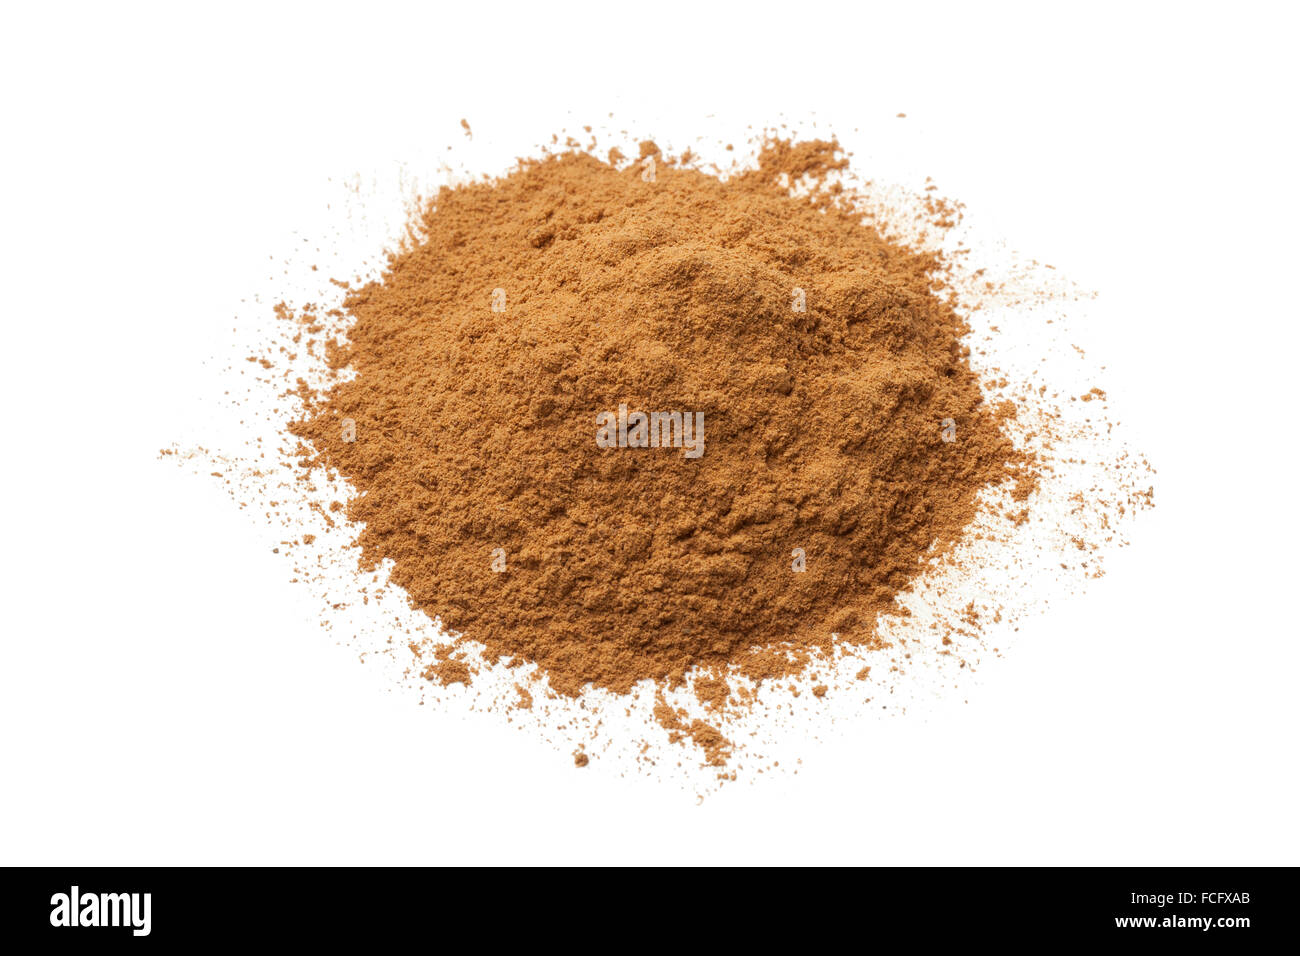 Heap of ground Cinnamon powder on white background Stock Photo